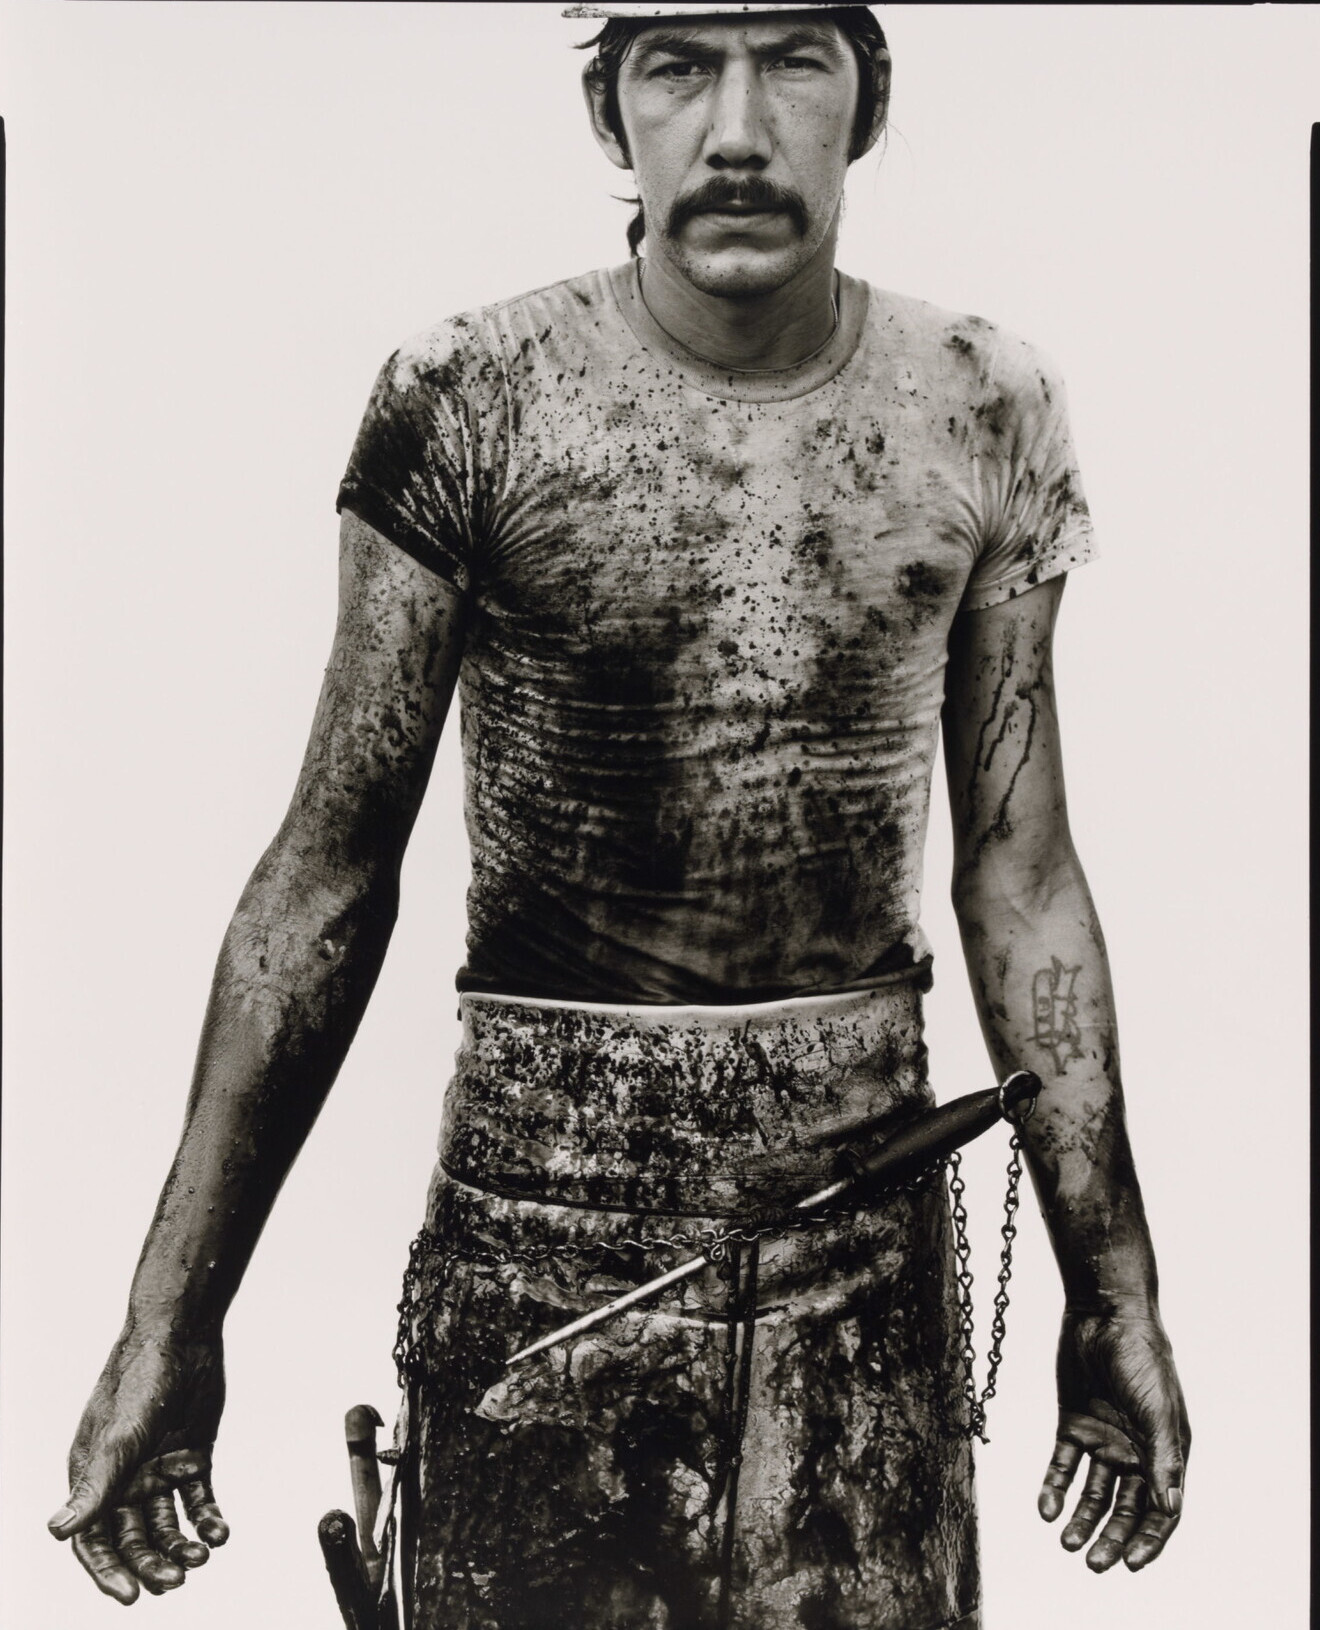 Блю Клауд Райт, работник скотобойни, Омаха, Небраска, 1979 г. Фотограф Ричард Аведон